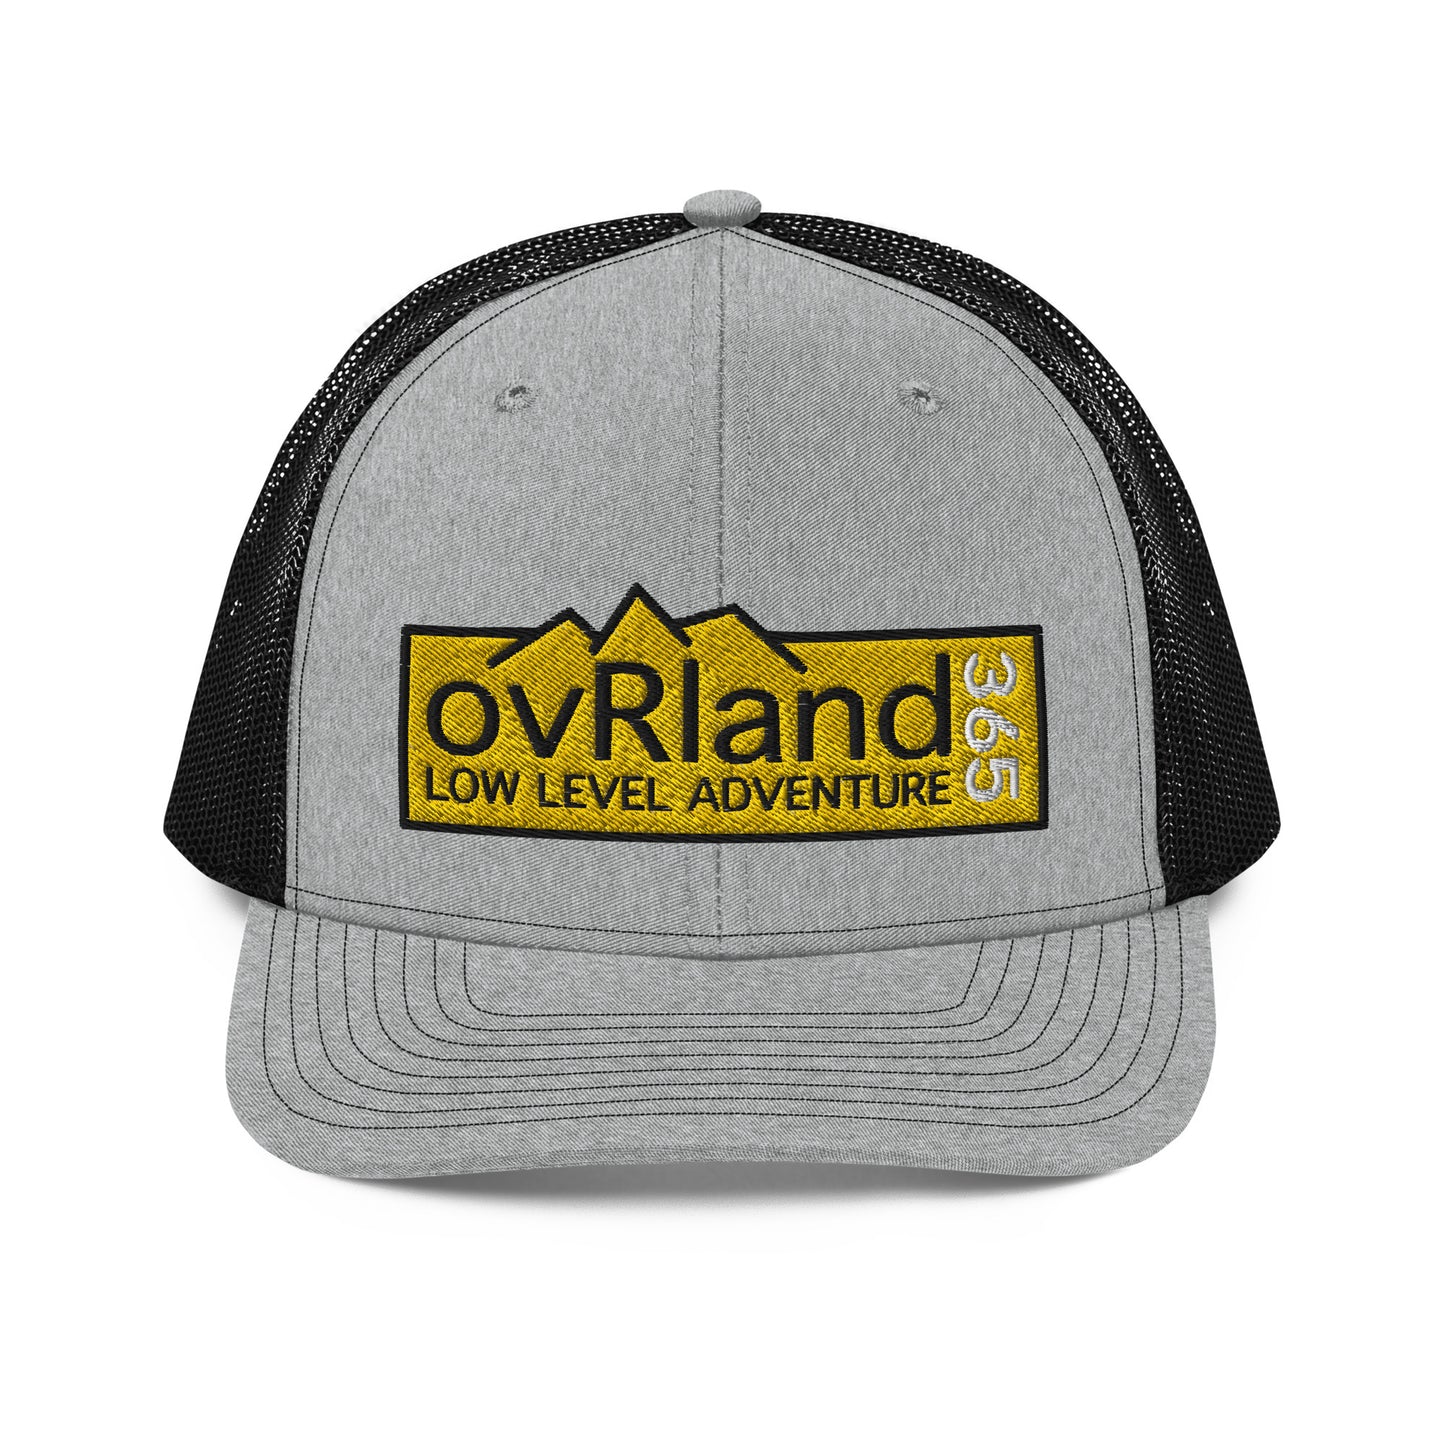 ovRland365 - Low Level Adventure overland hat. grey/black front view. overland365.com